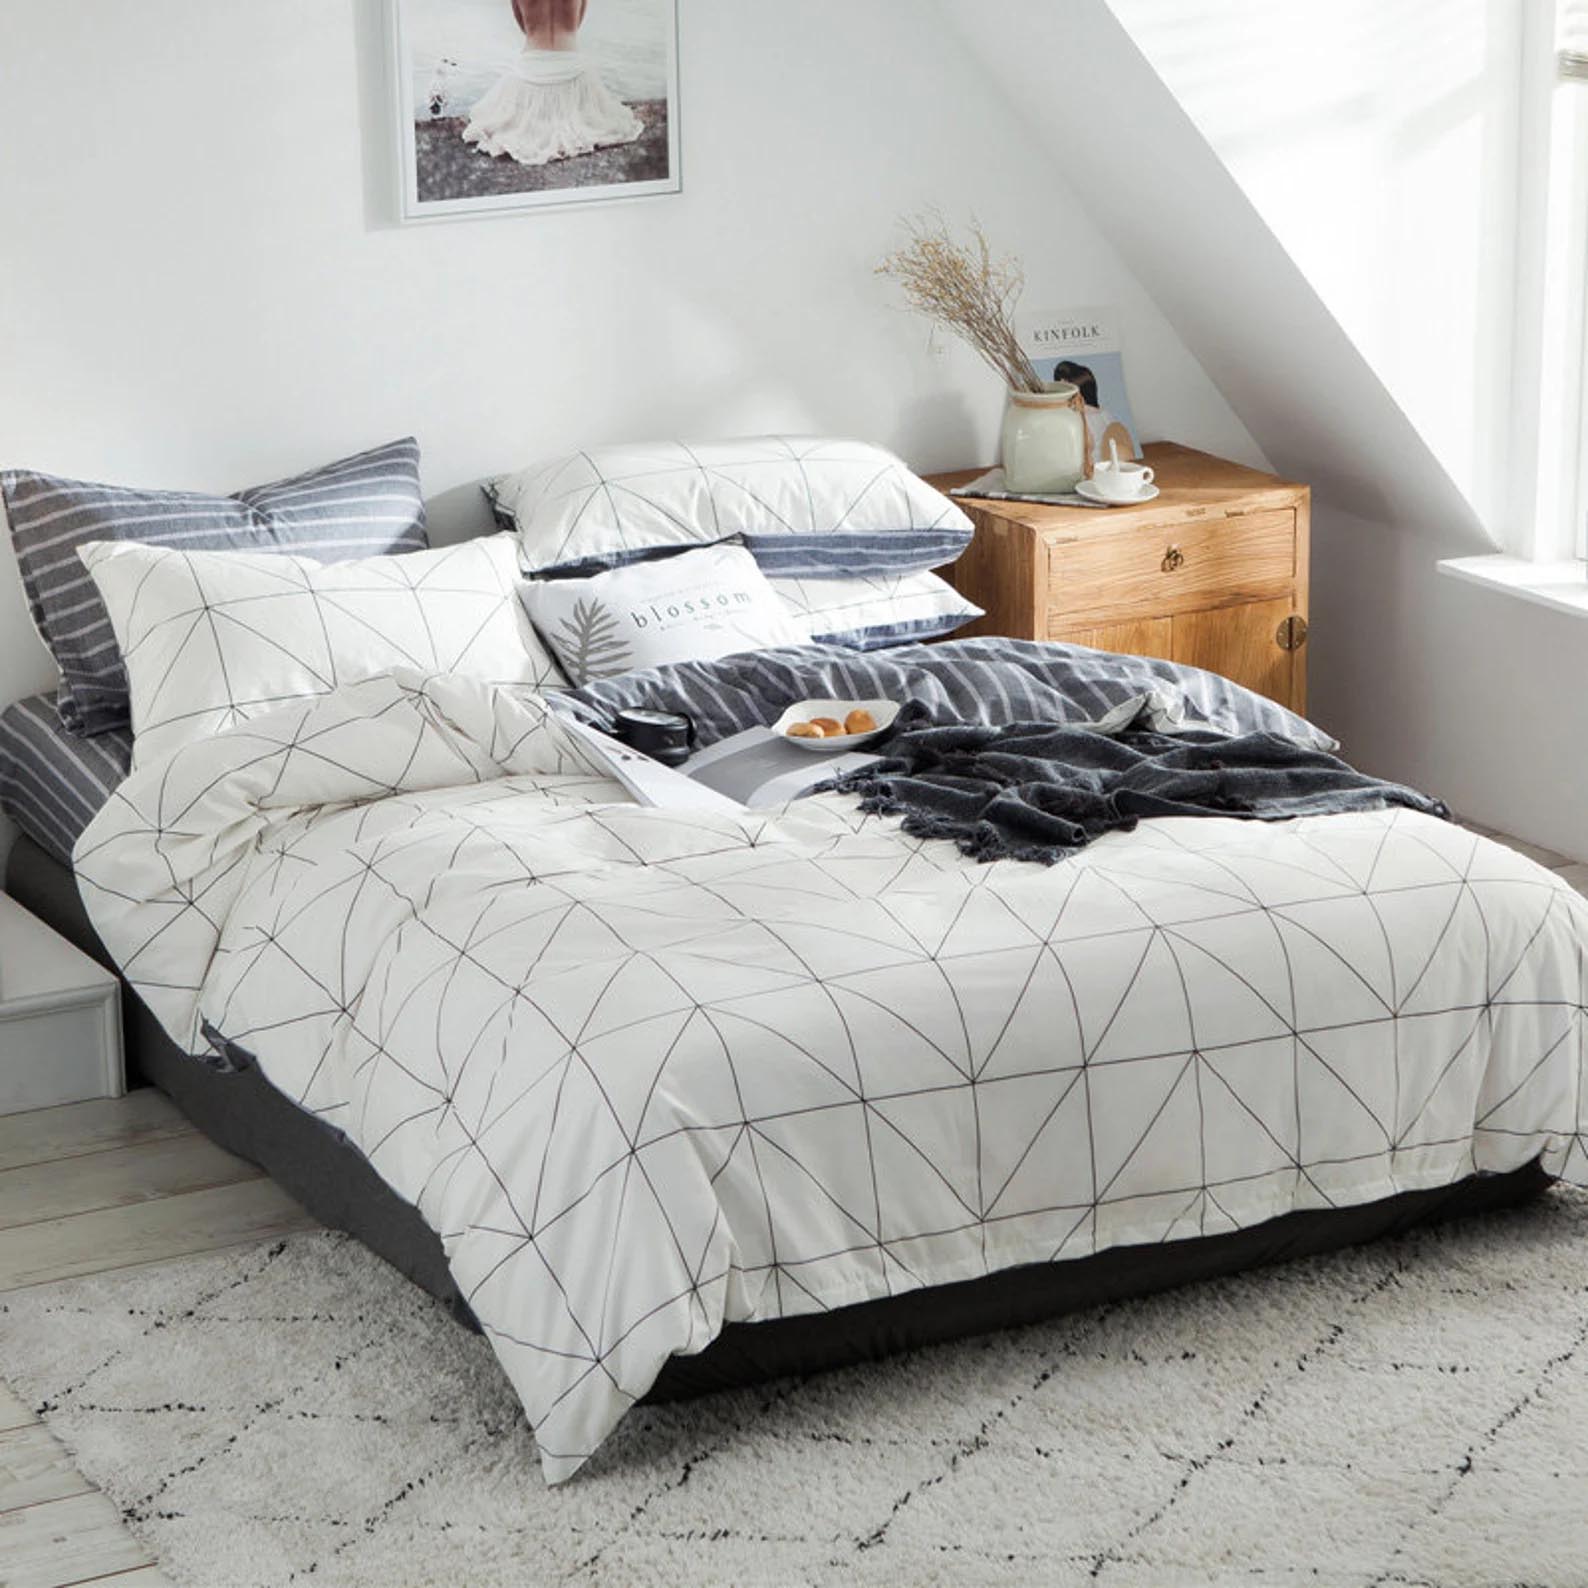 Modern Bedroom Decor - Minimalist geometric bedding.